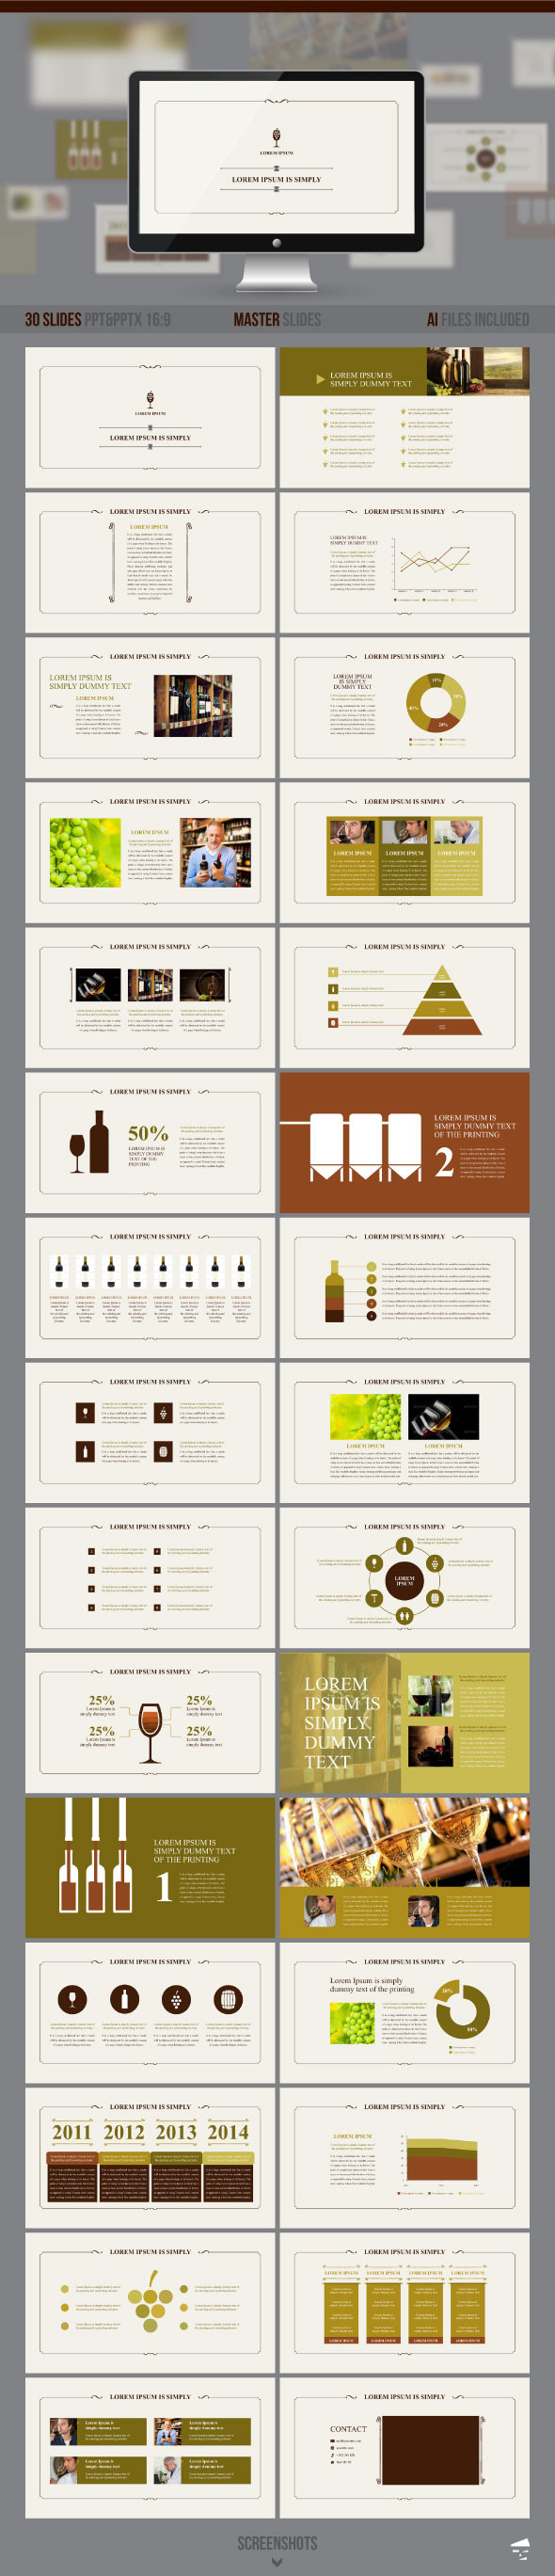 Presentation of Wine